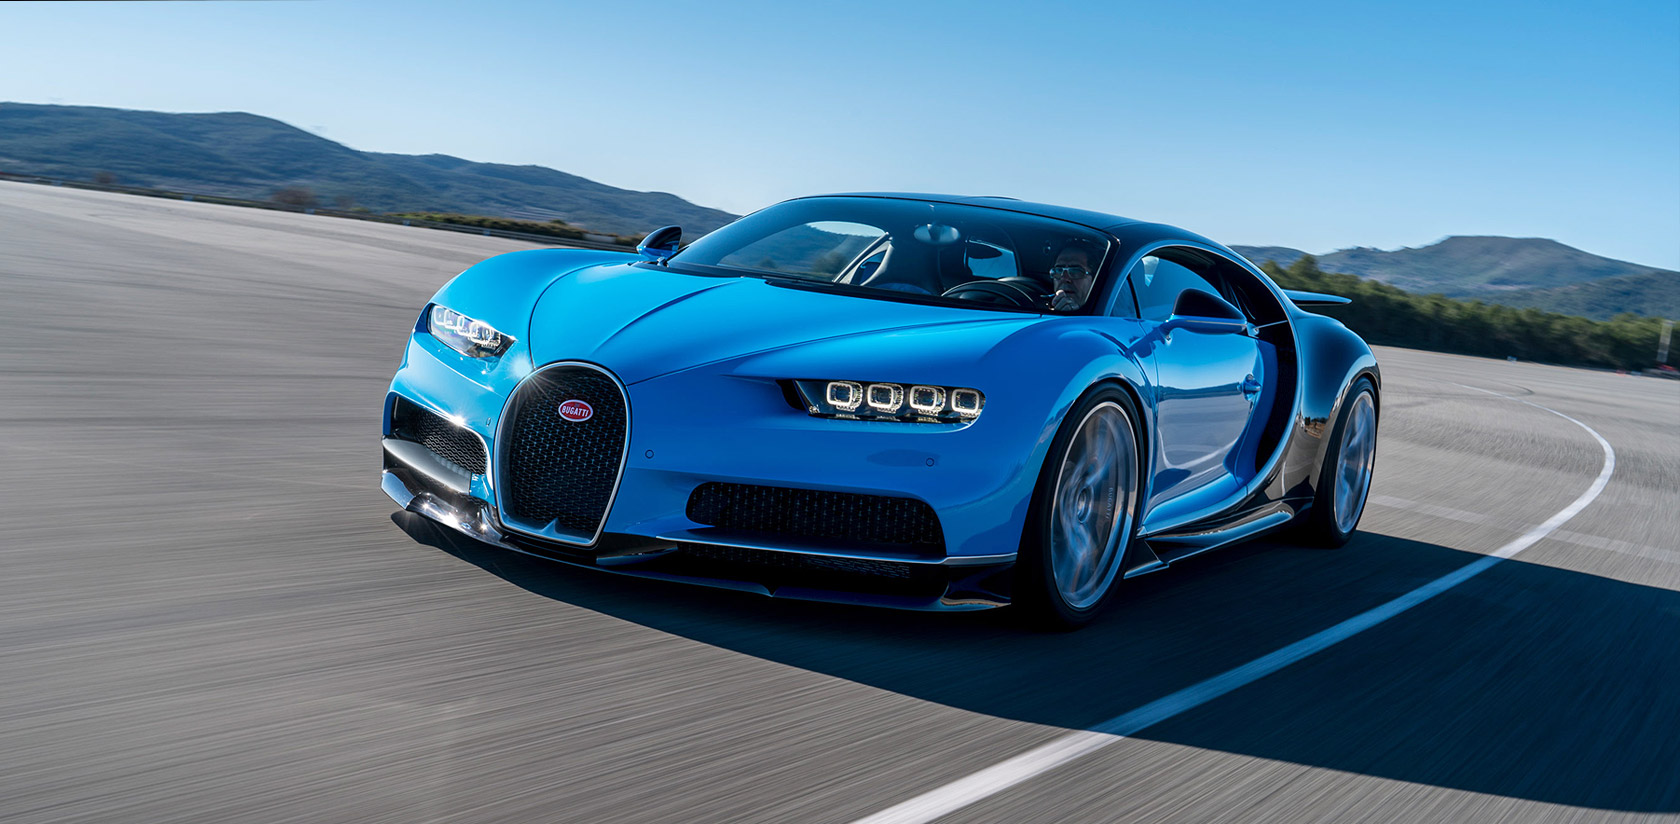 Siêu xe Bugatti Chiron - Ảnh: Bugatti